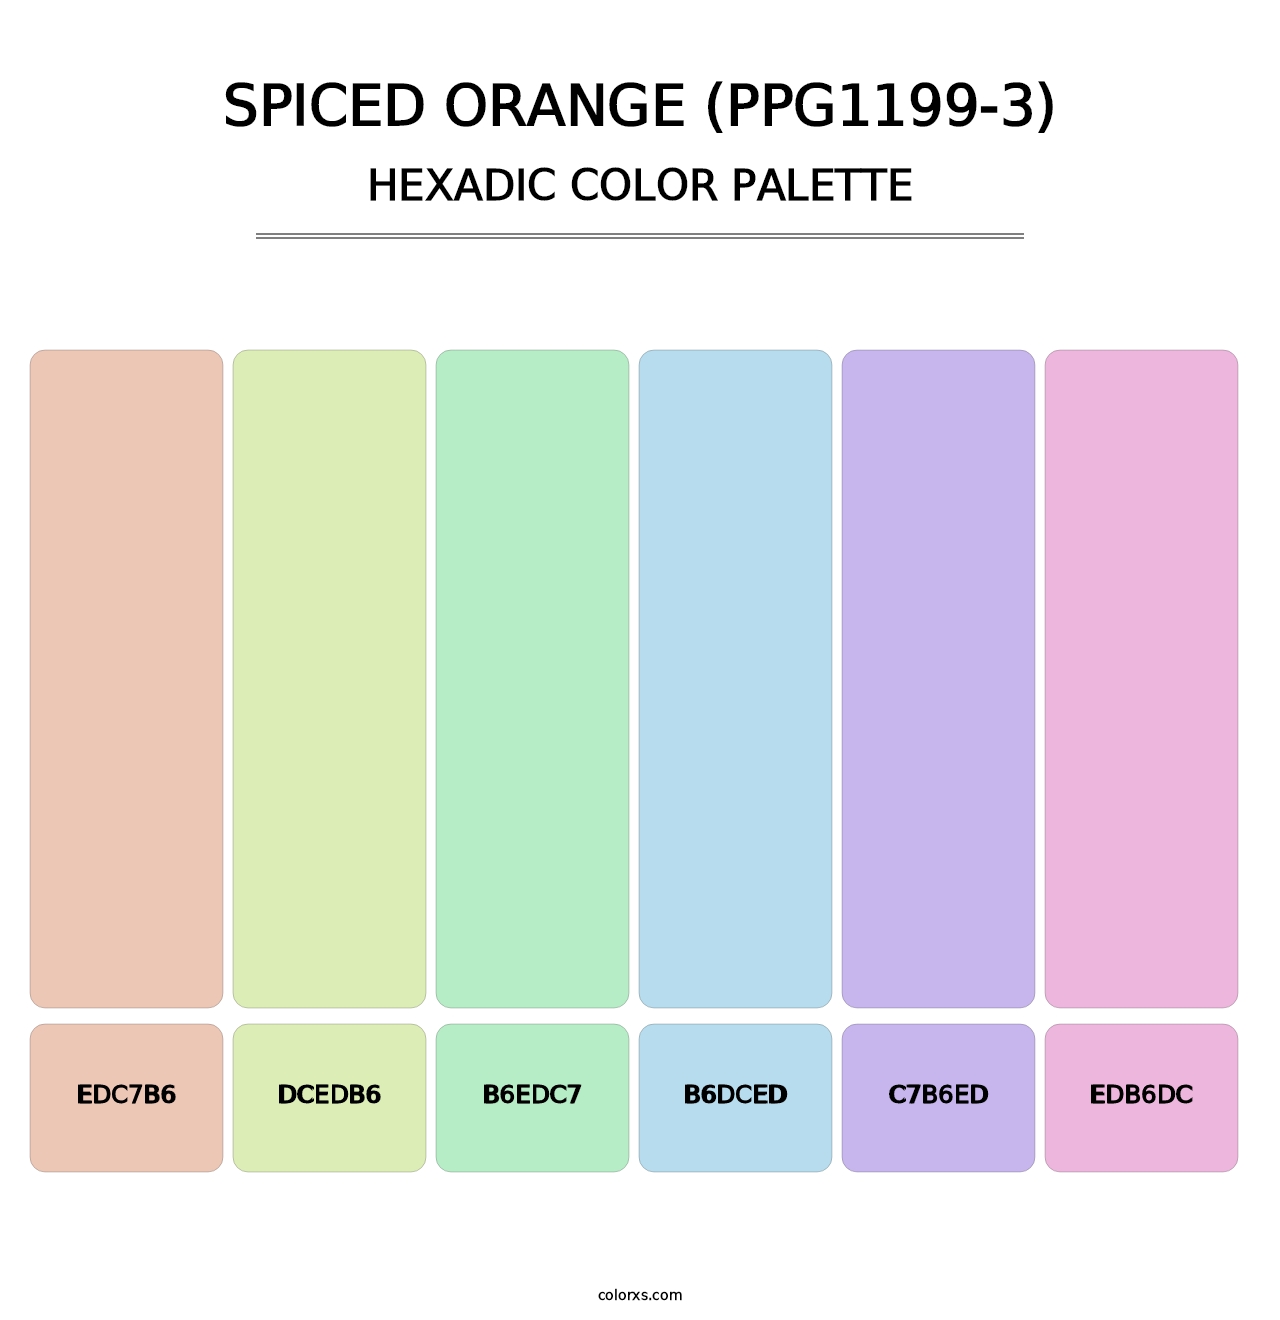 Spiced Orange (PPG1199-3) - Hexadic Color Palette